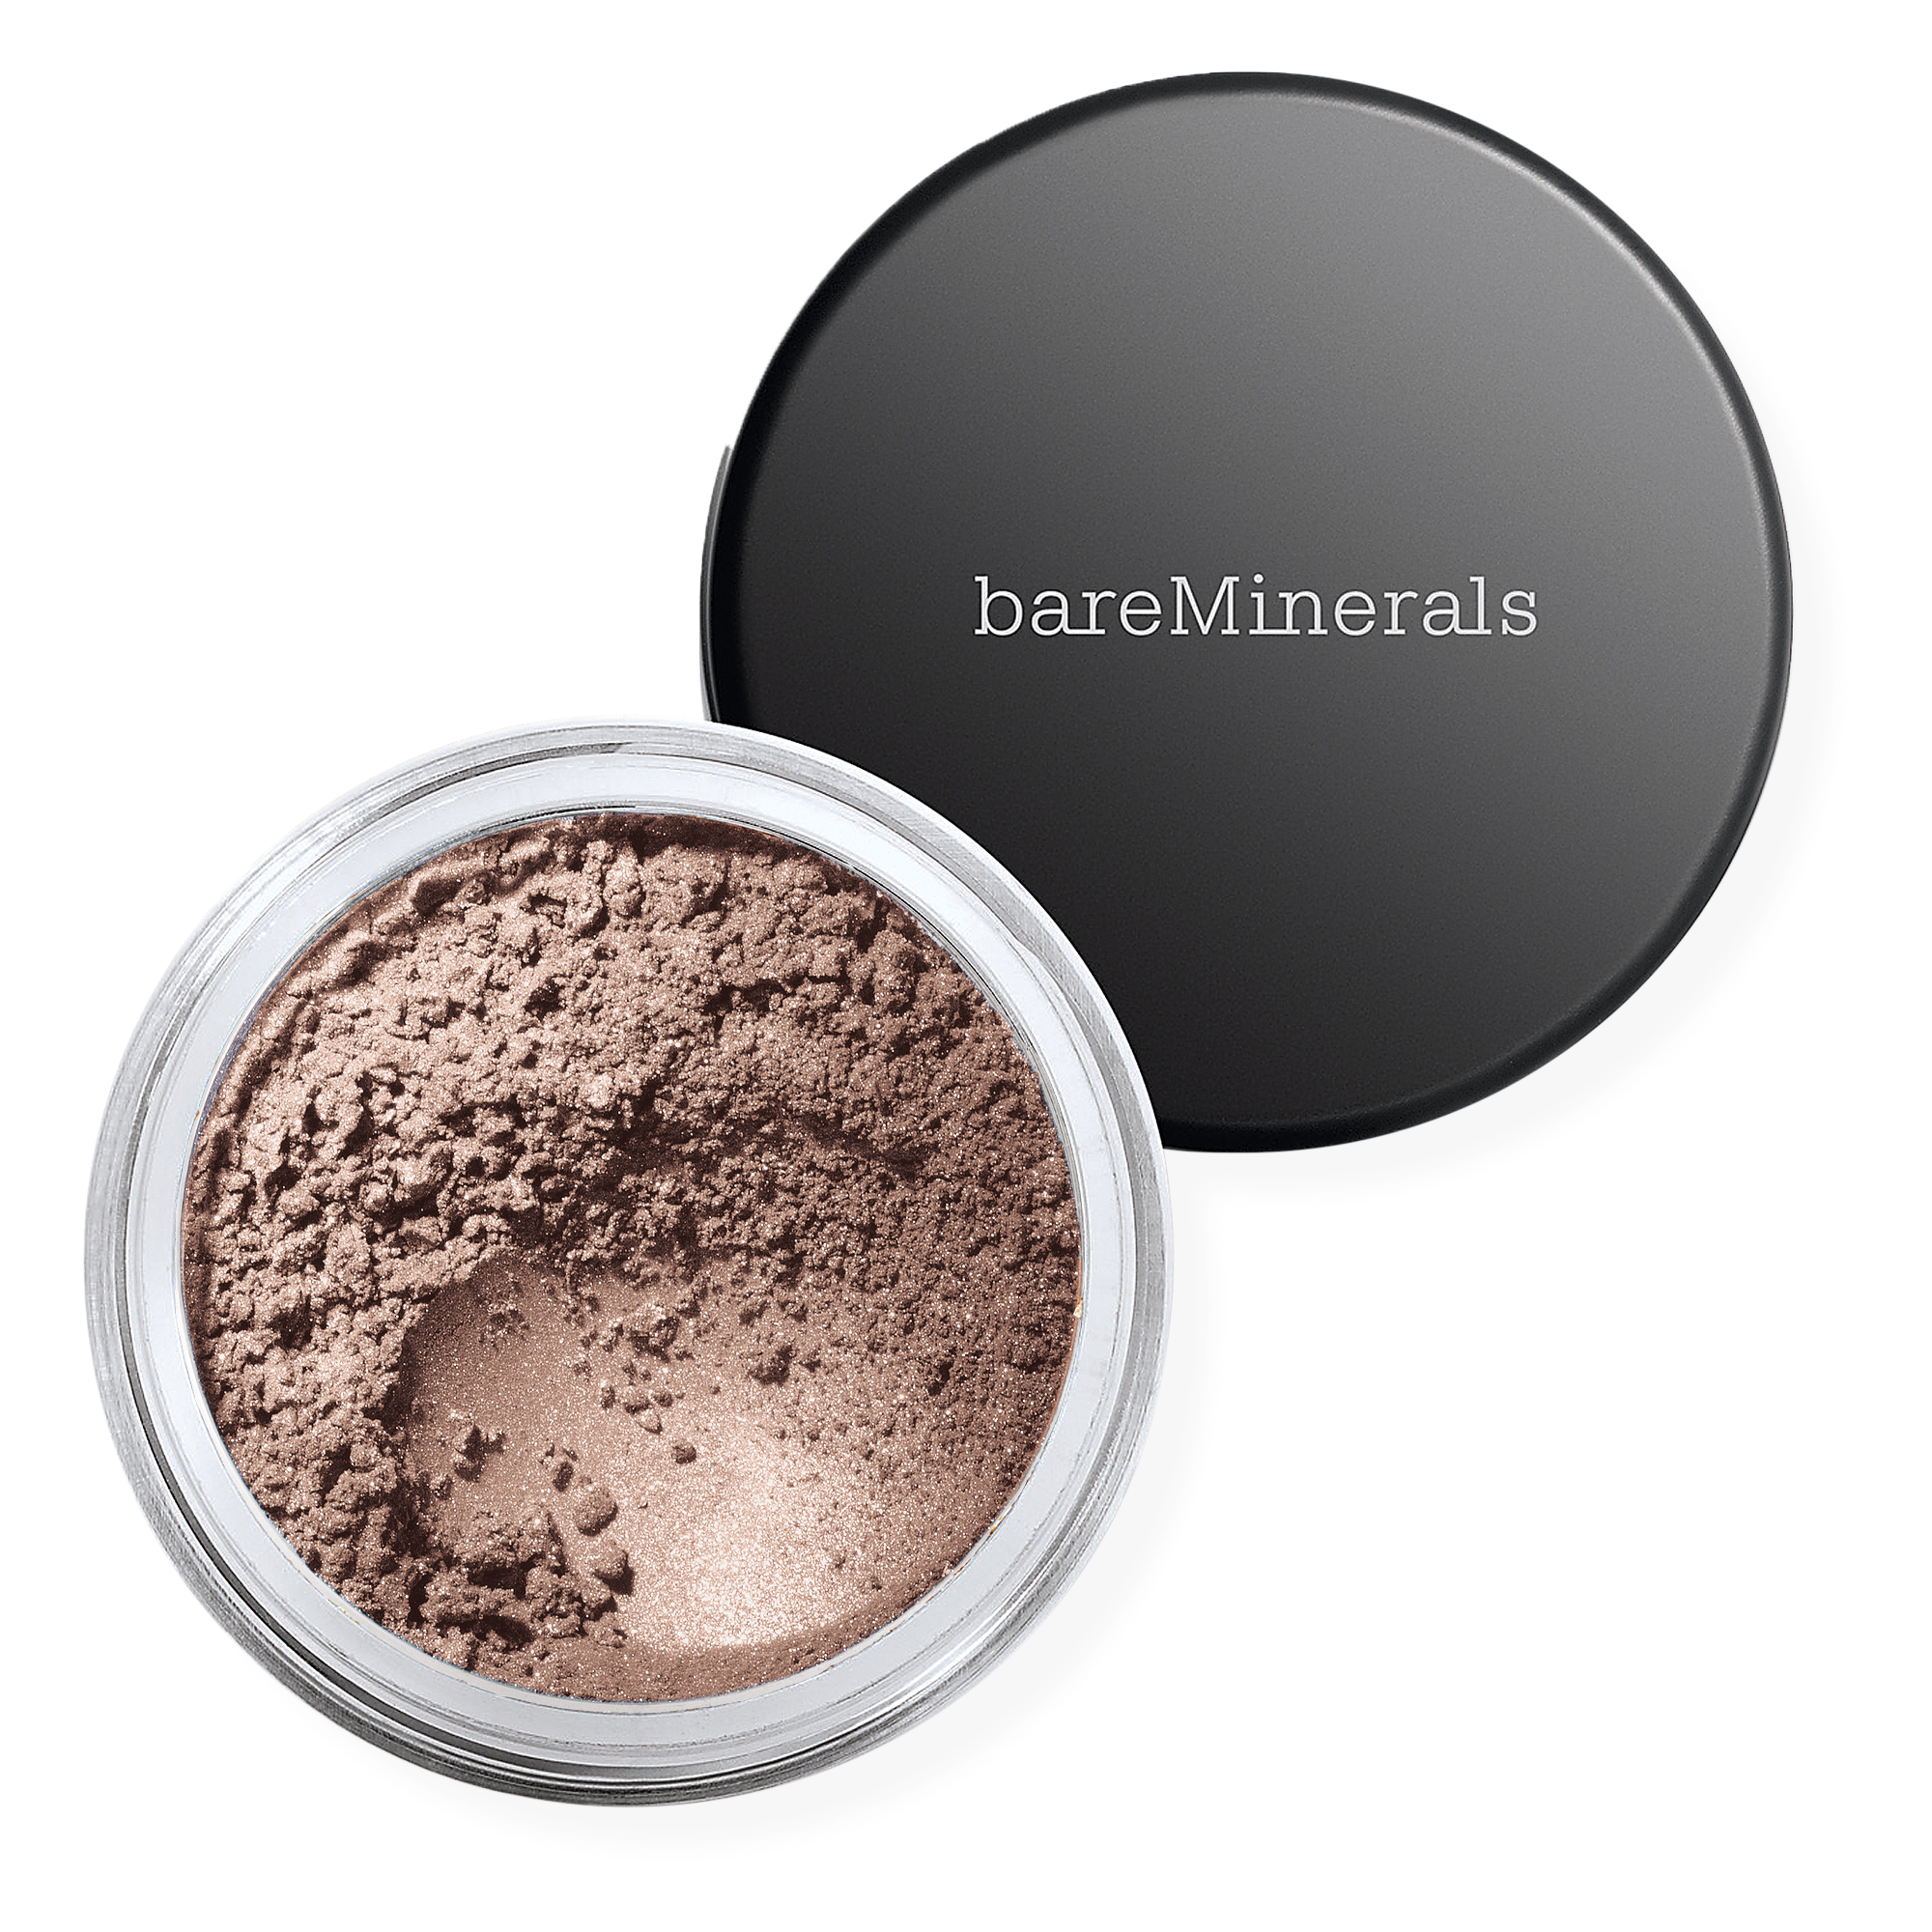 bareMinerals Loose Mineral Eyecolor / CELESTINE